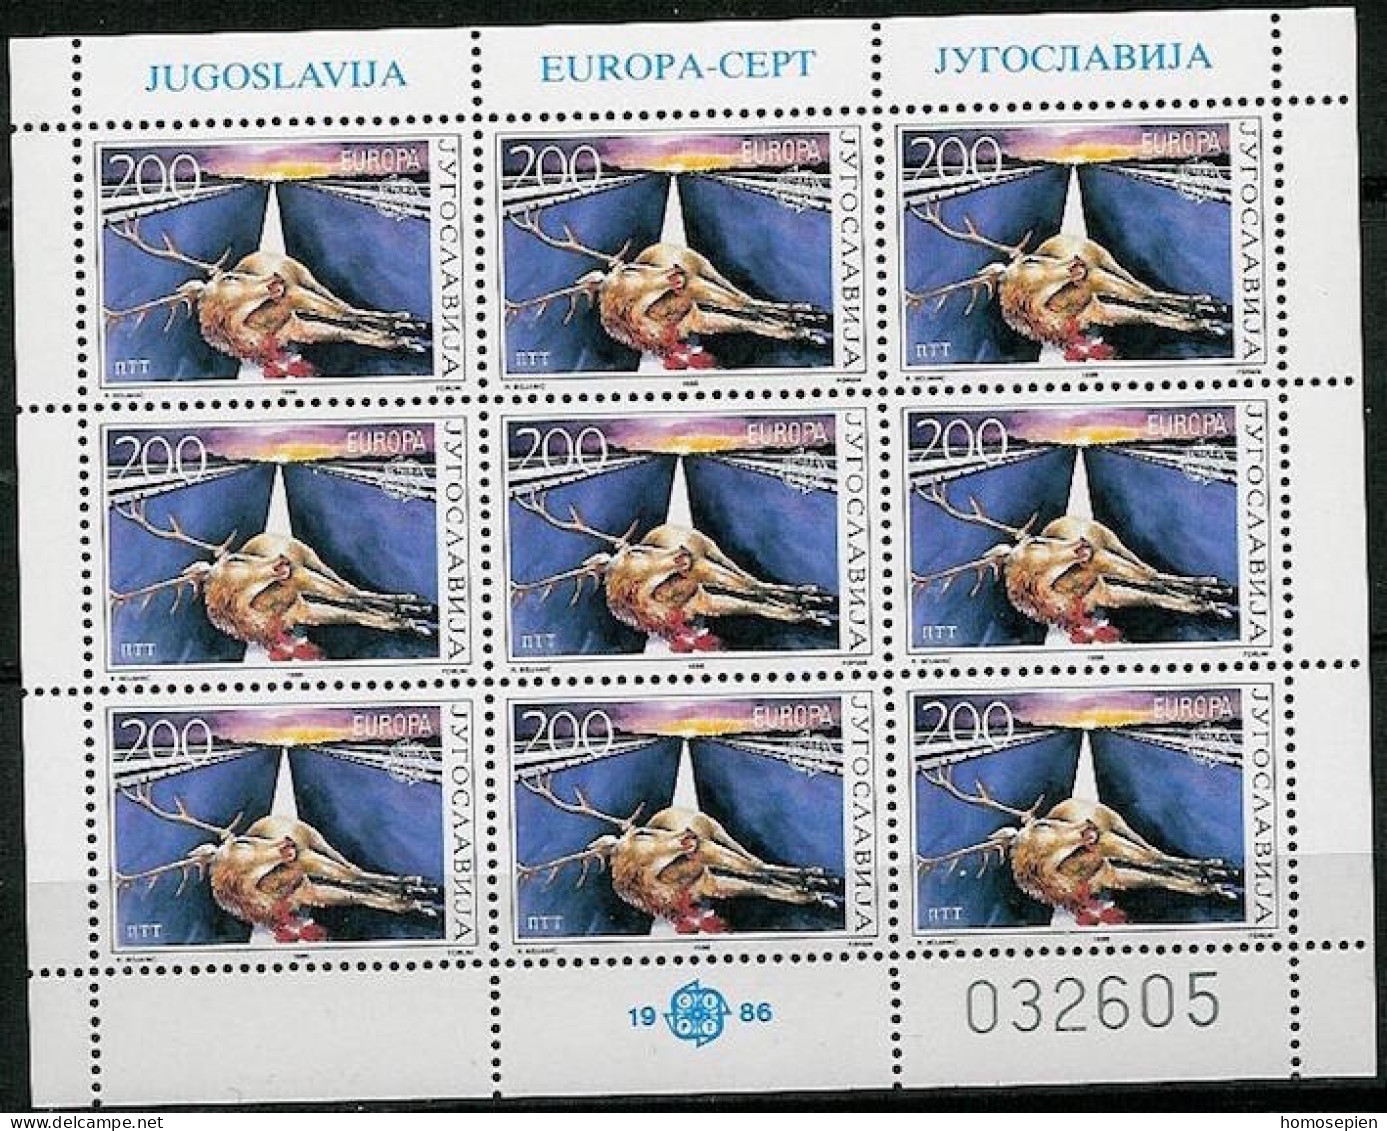 Europa CEPT 1986 Yougoslavie - Jugoslawien - Yugoslavia Y&T N°F2033 à F2034 - Michel N°KB2156 à KB2157 *** - 1986